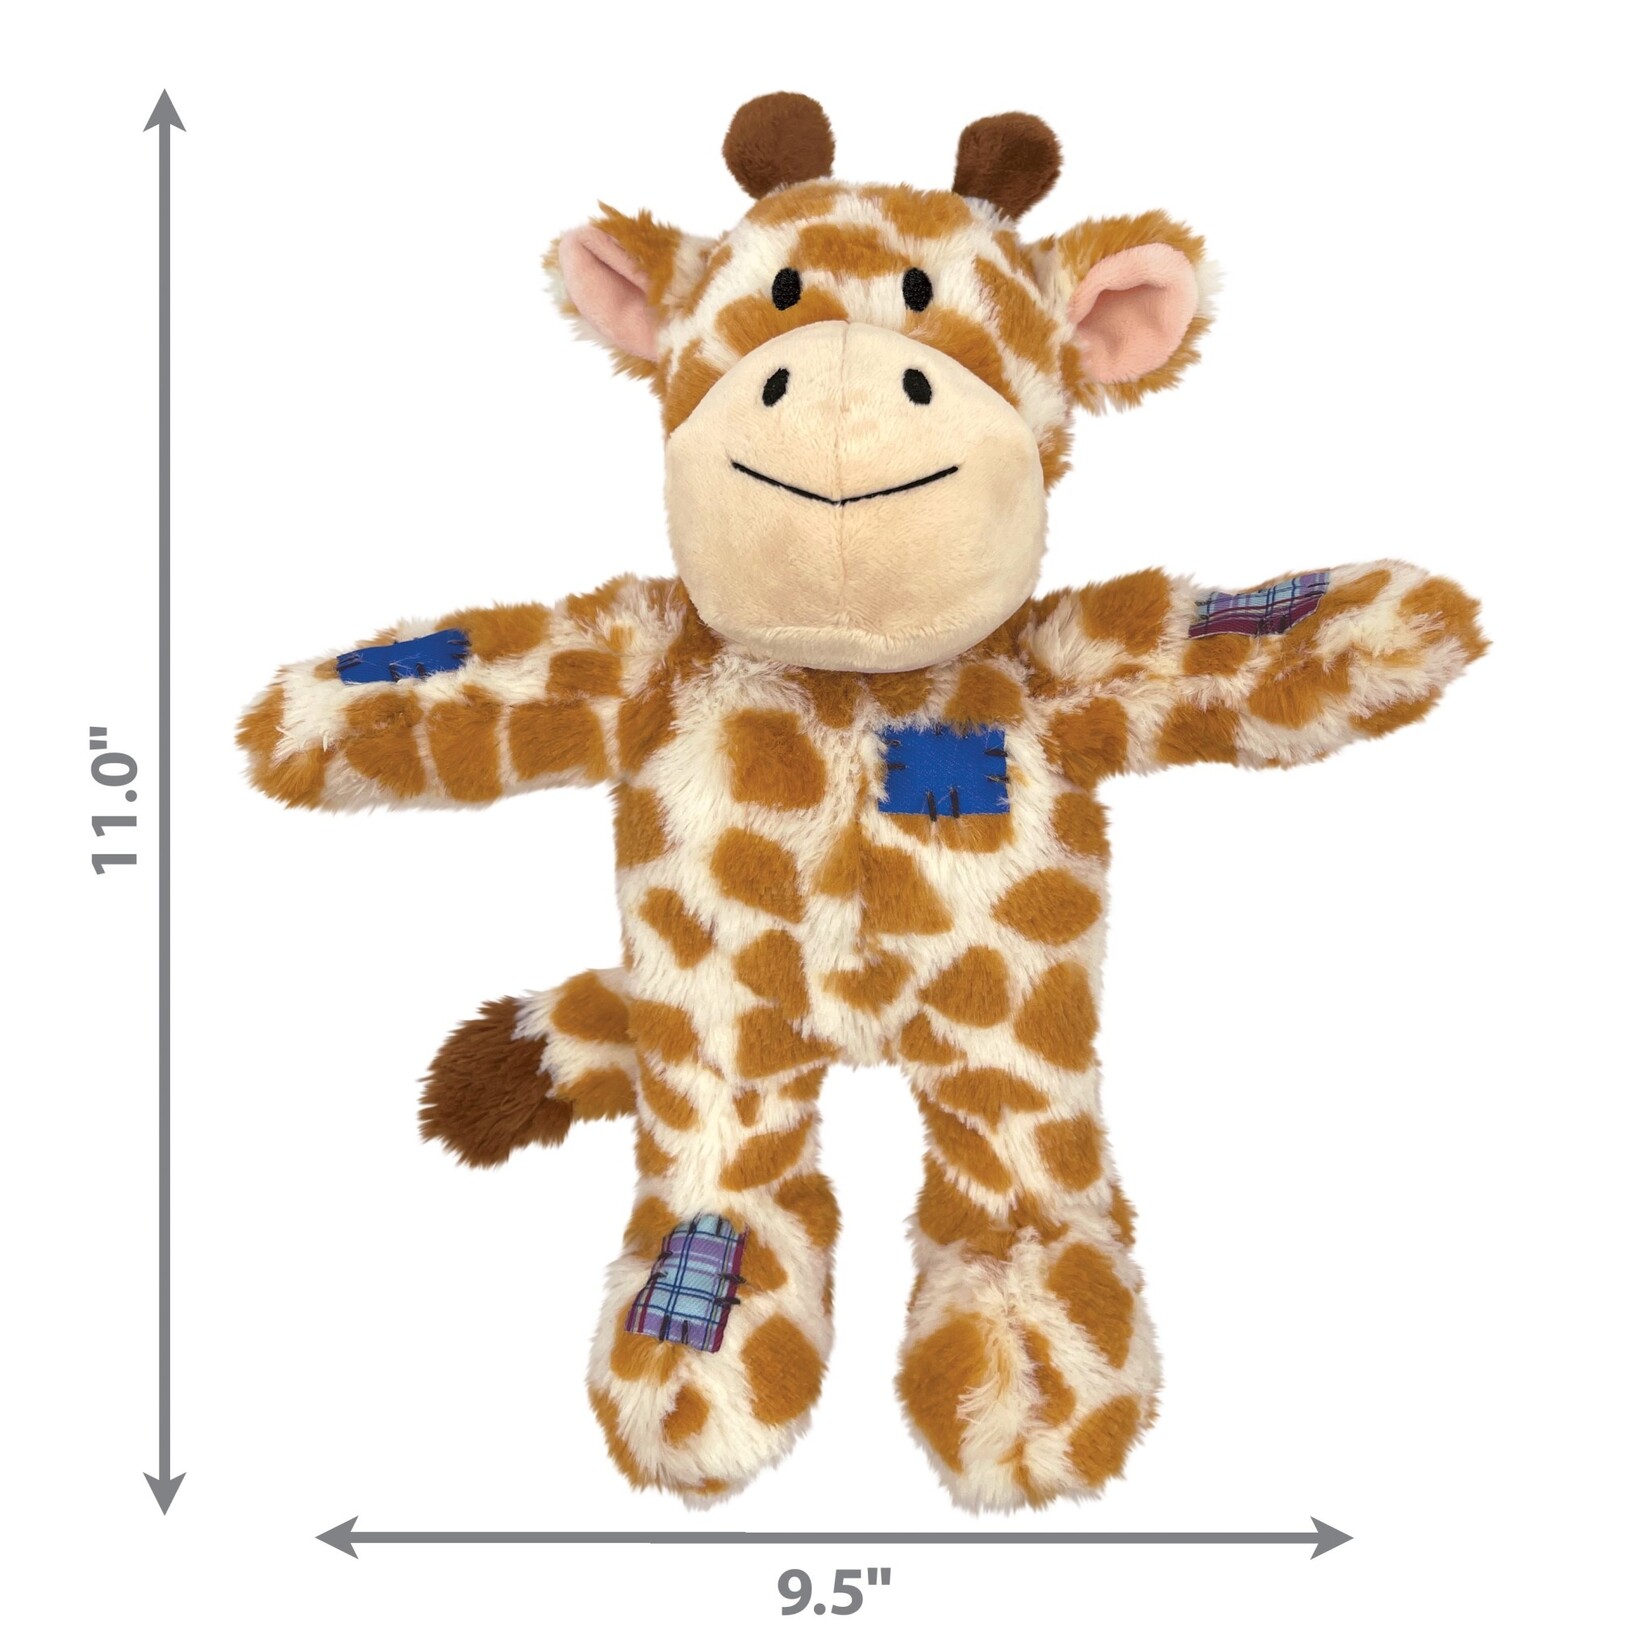 KONG Wild Knots Giraffe Squeaky Dog Toy